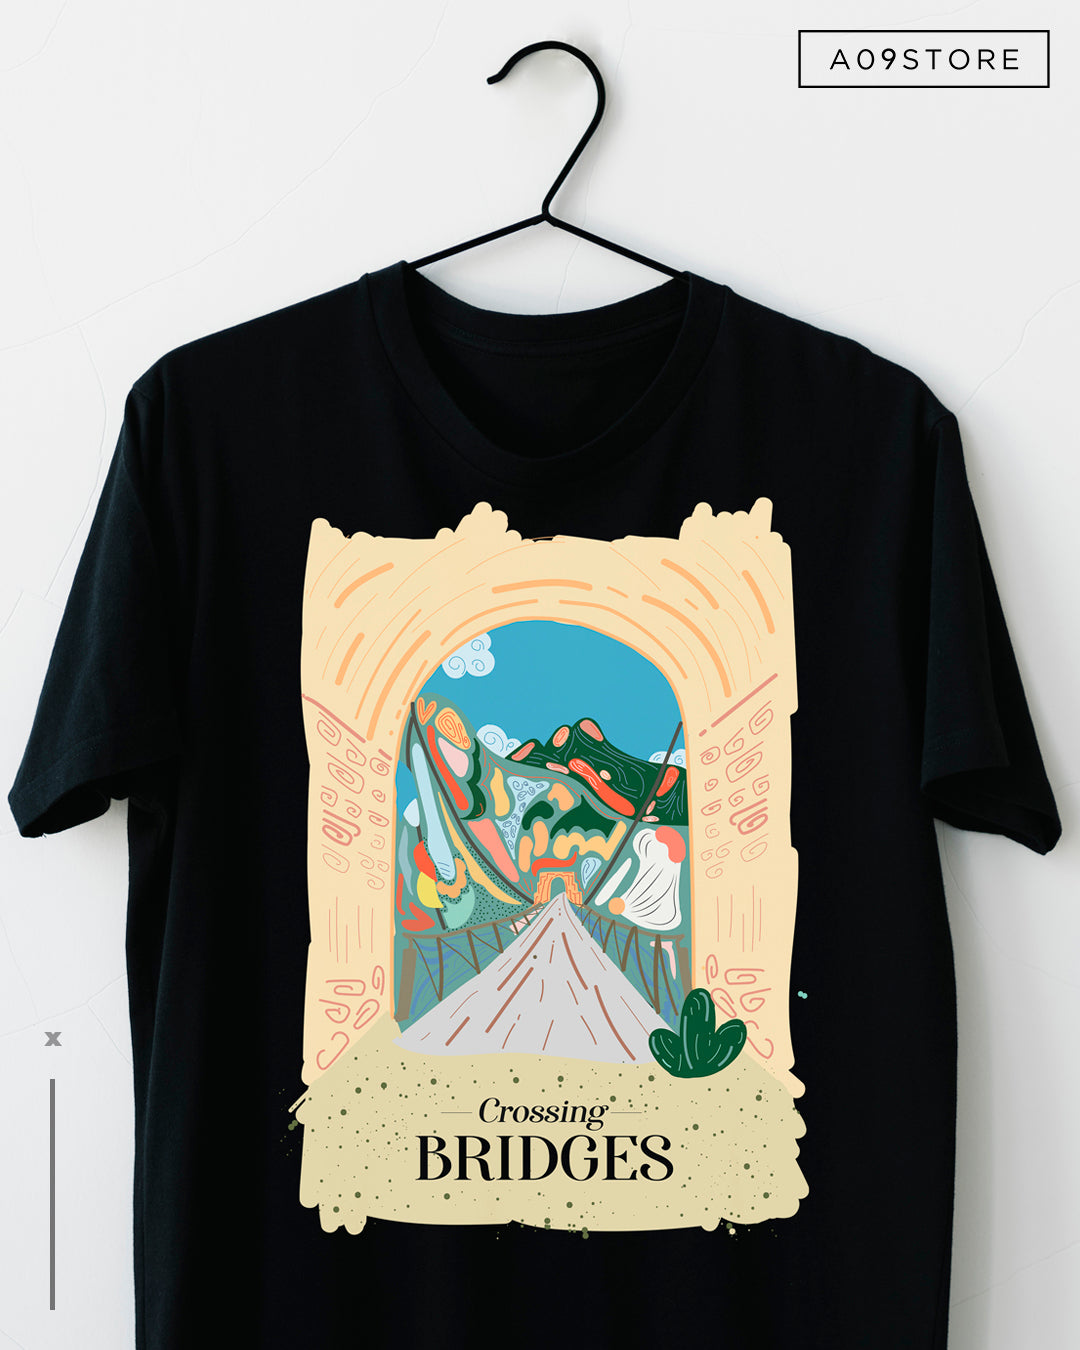 Travelher | Crossing Bridges - A09STORE